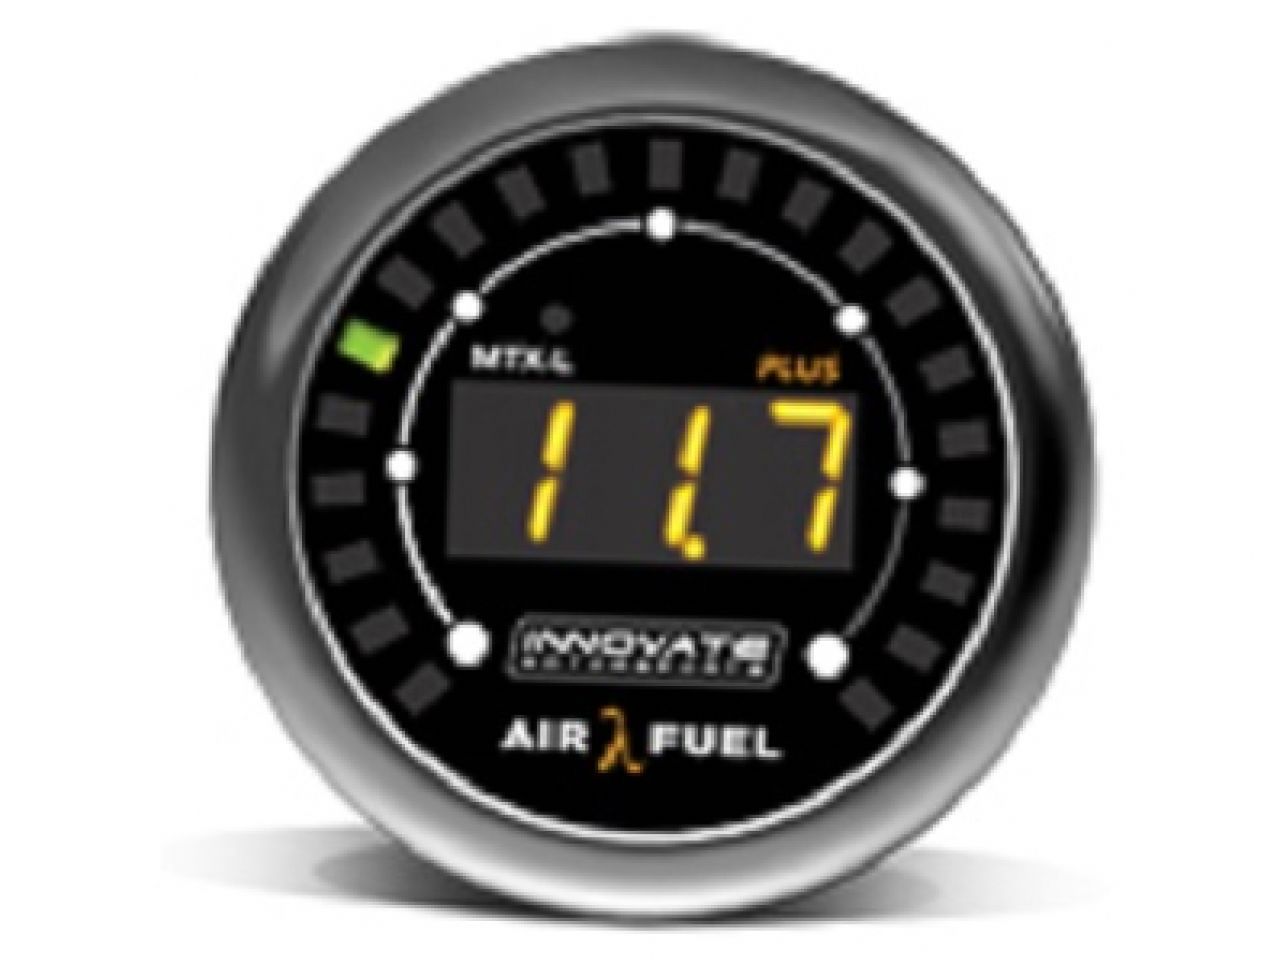 Innovate Motorsports MTX-L PLUS: Digital Air/Fuel Ratio Gauge Kit, 8 ft., w/O2 Sensor